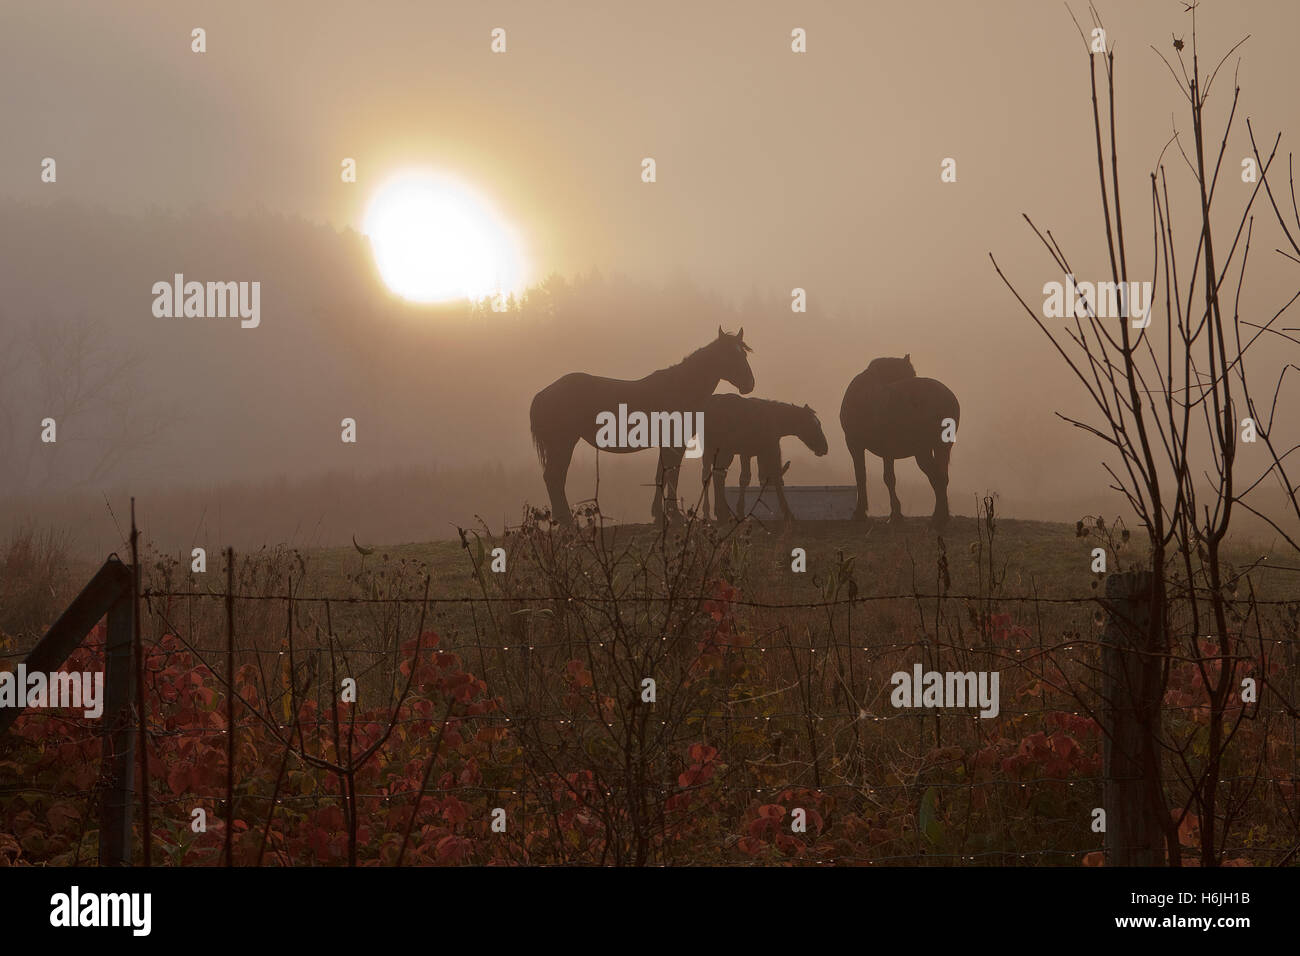 Horses in pasture at sunrise Stock Photo